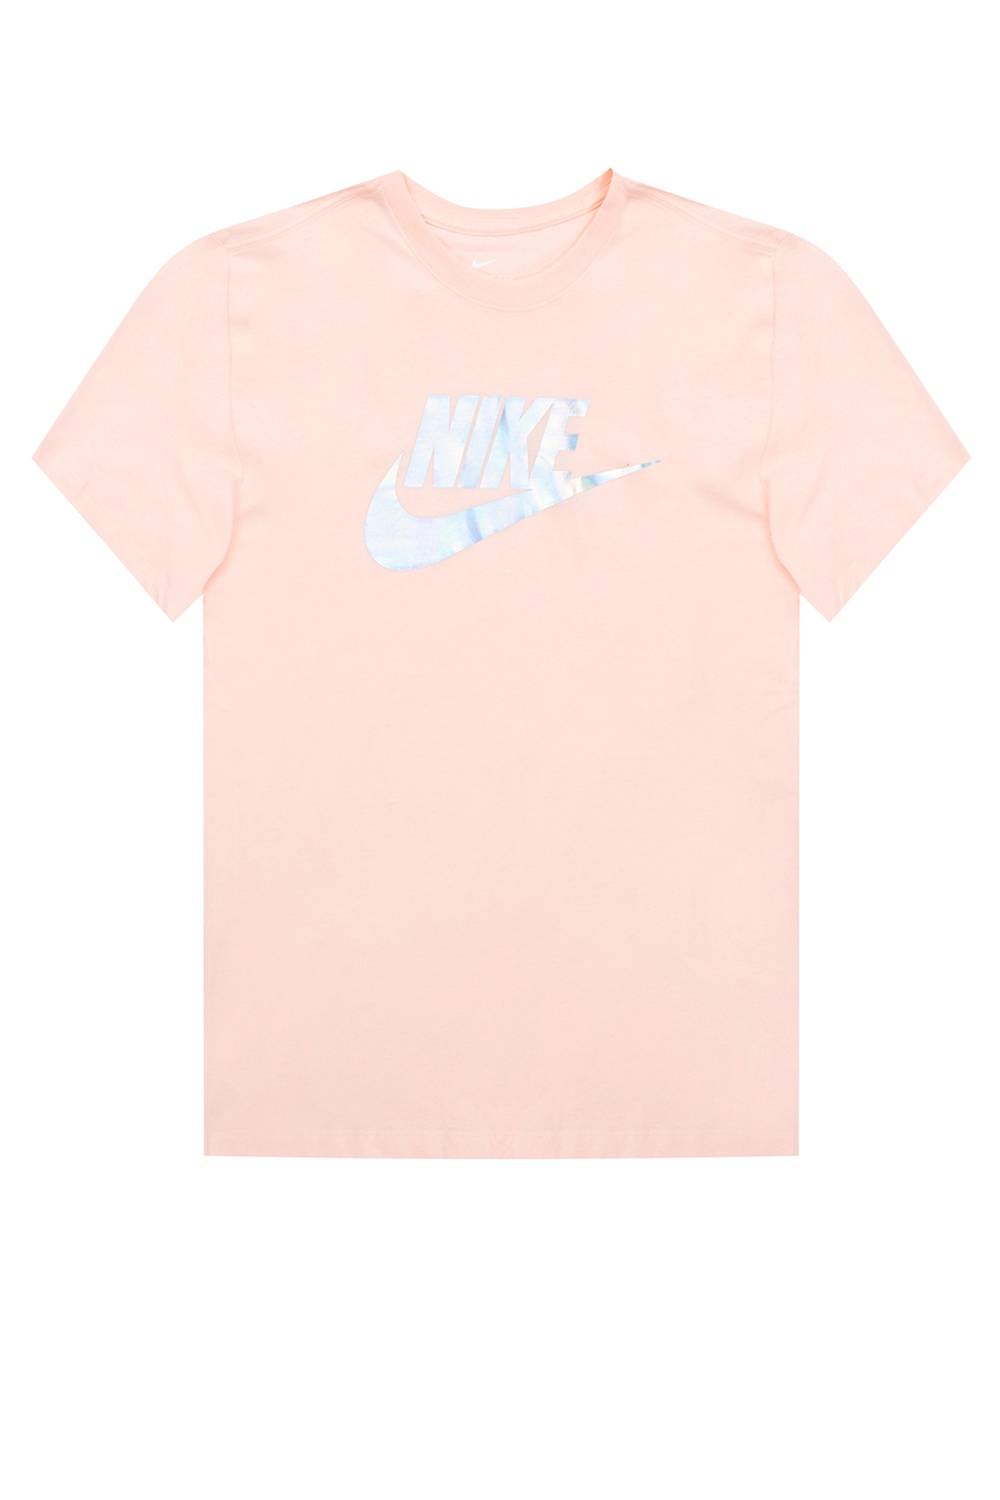 nike logo for shirts